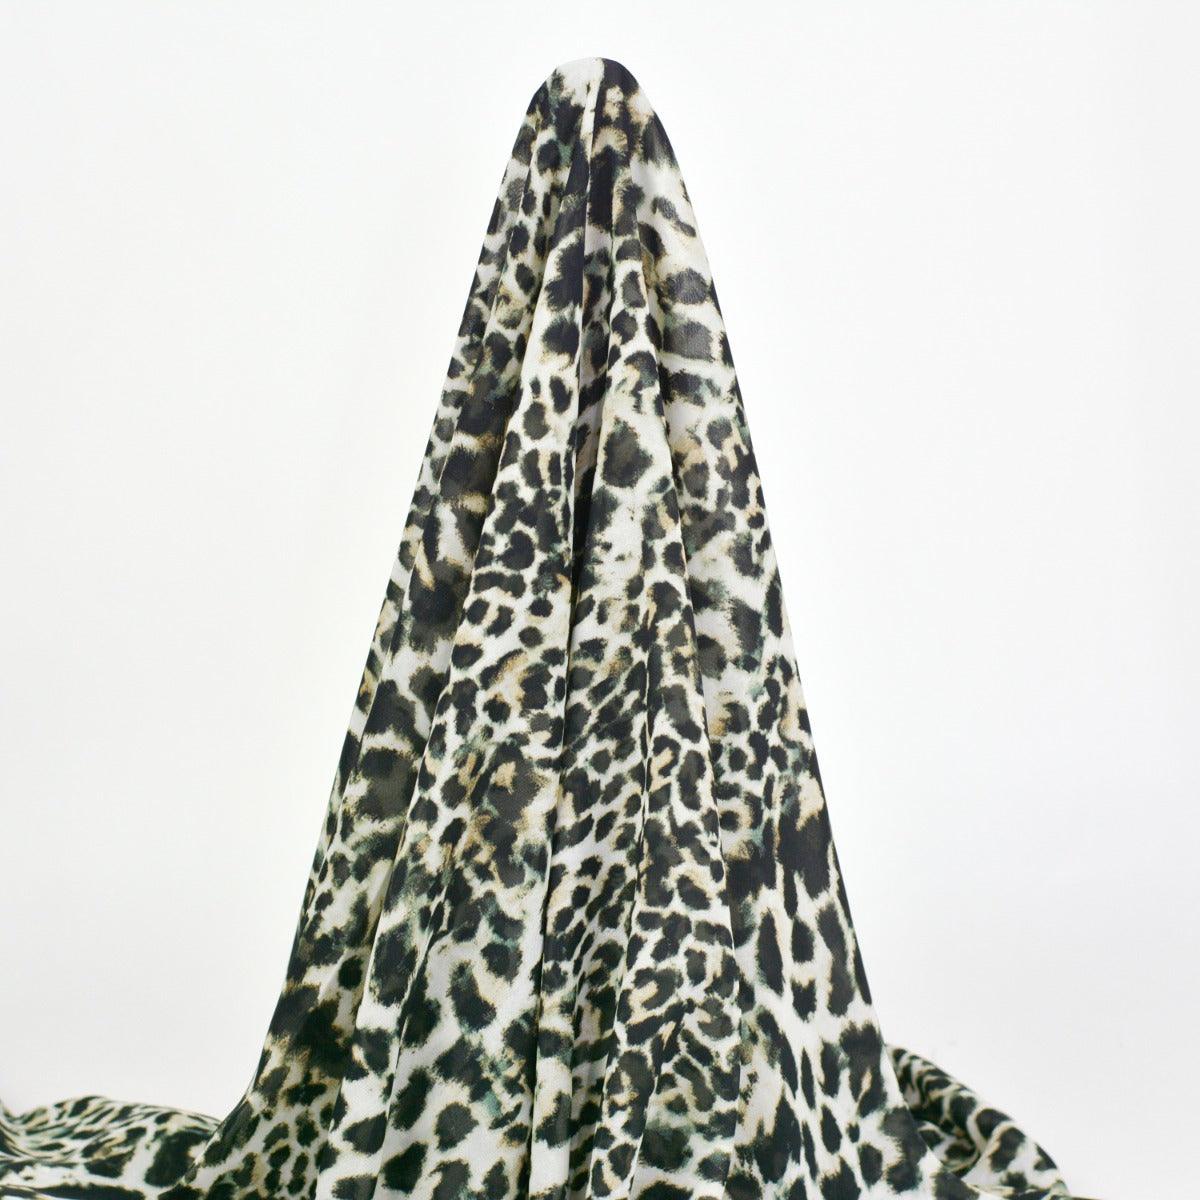 Voal animal print - Leopard